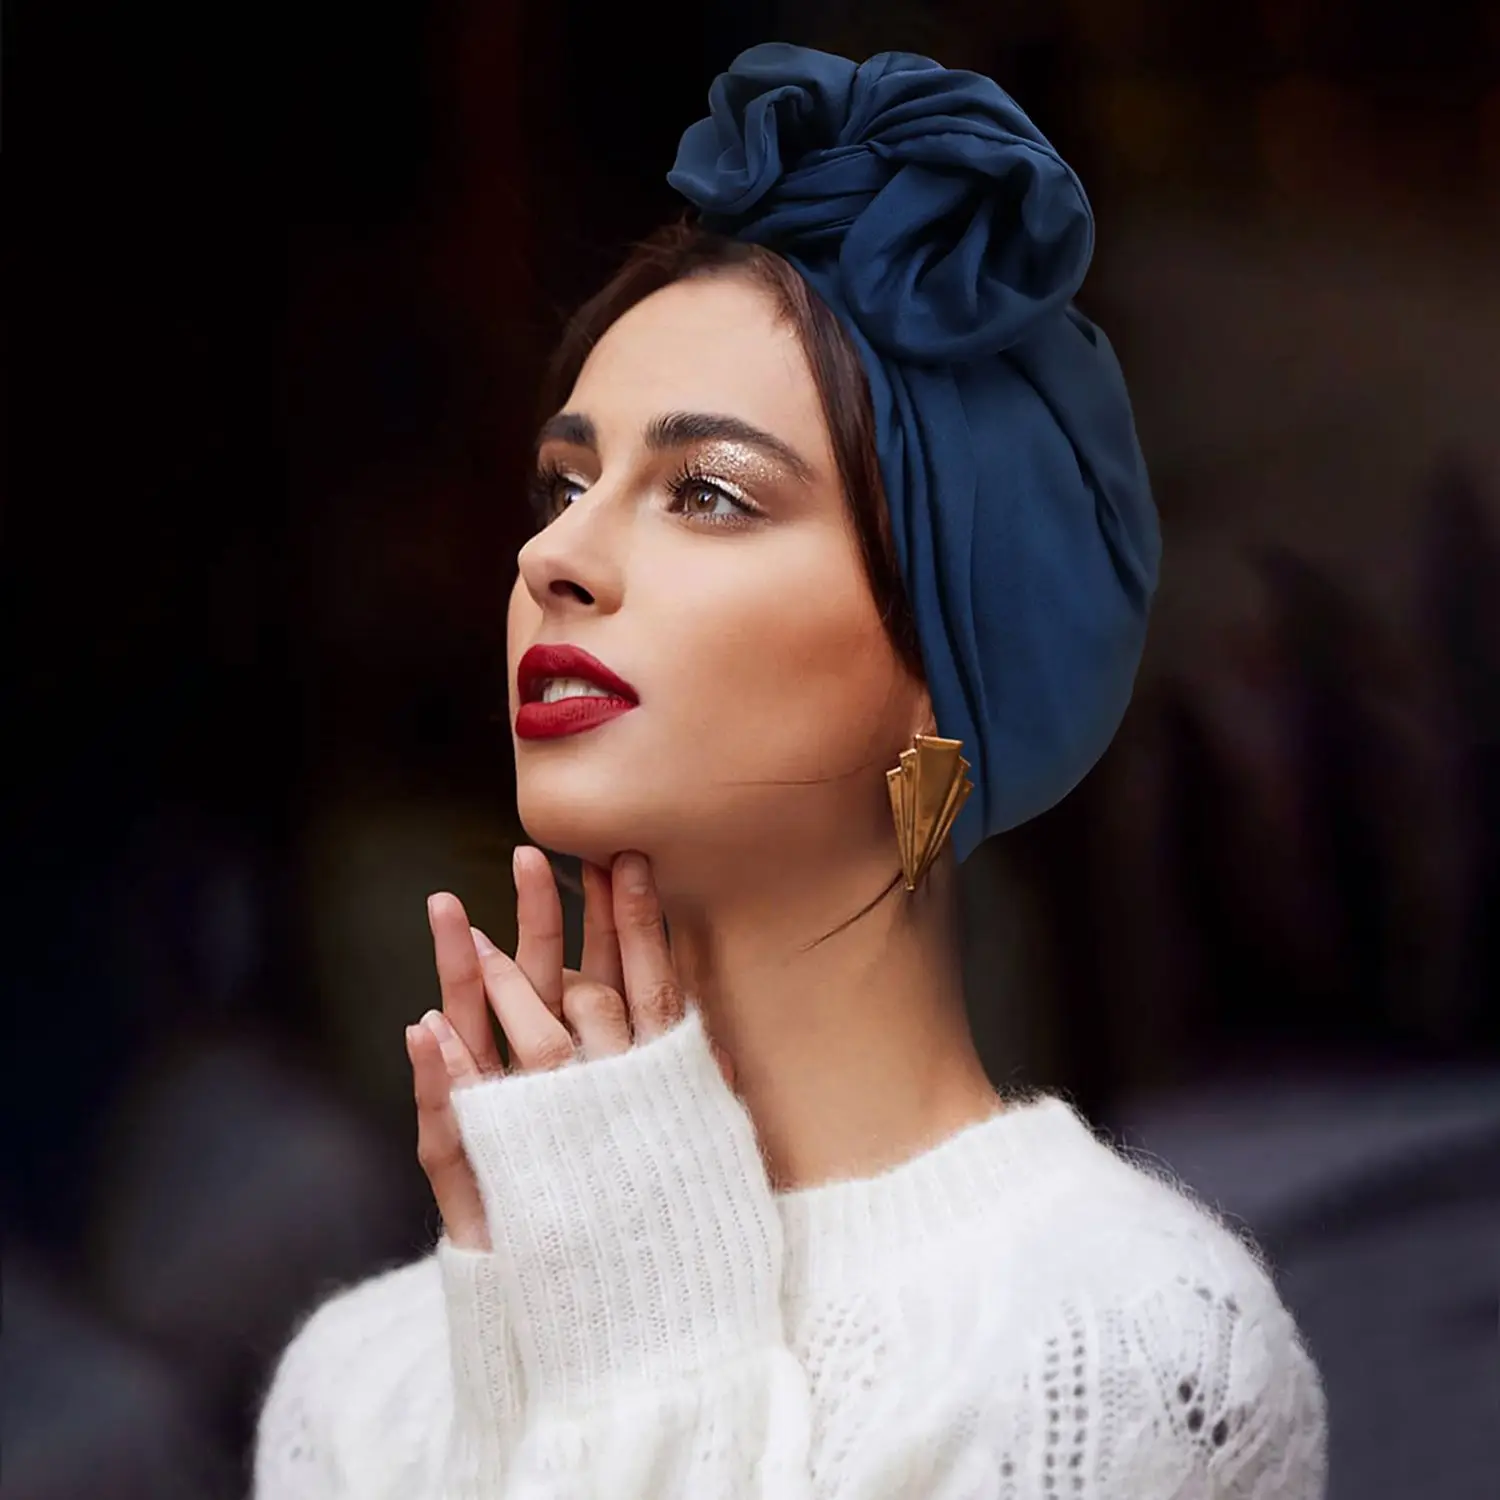 Franse Vintage Tulband Hoed Mode Vrouw Bandana Hoofdband Dames Haar Cap Dames Hoofd Wraps Moslim Hoofddoek